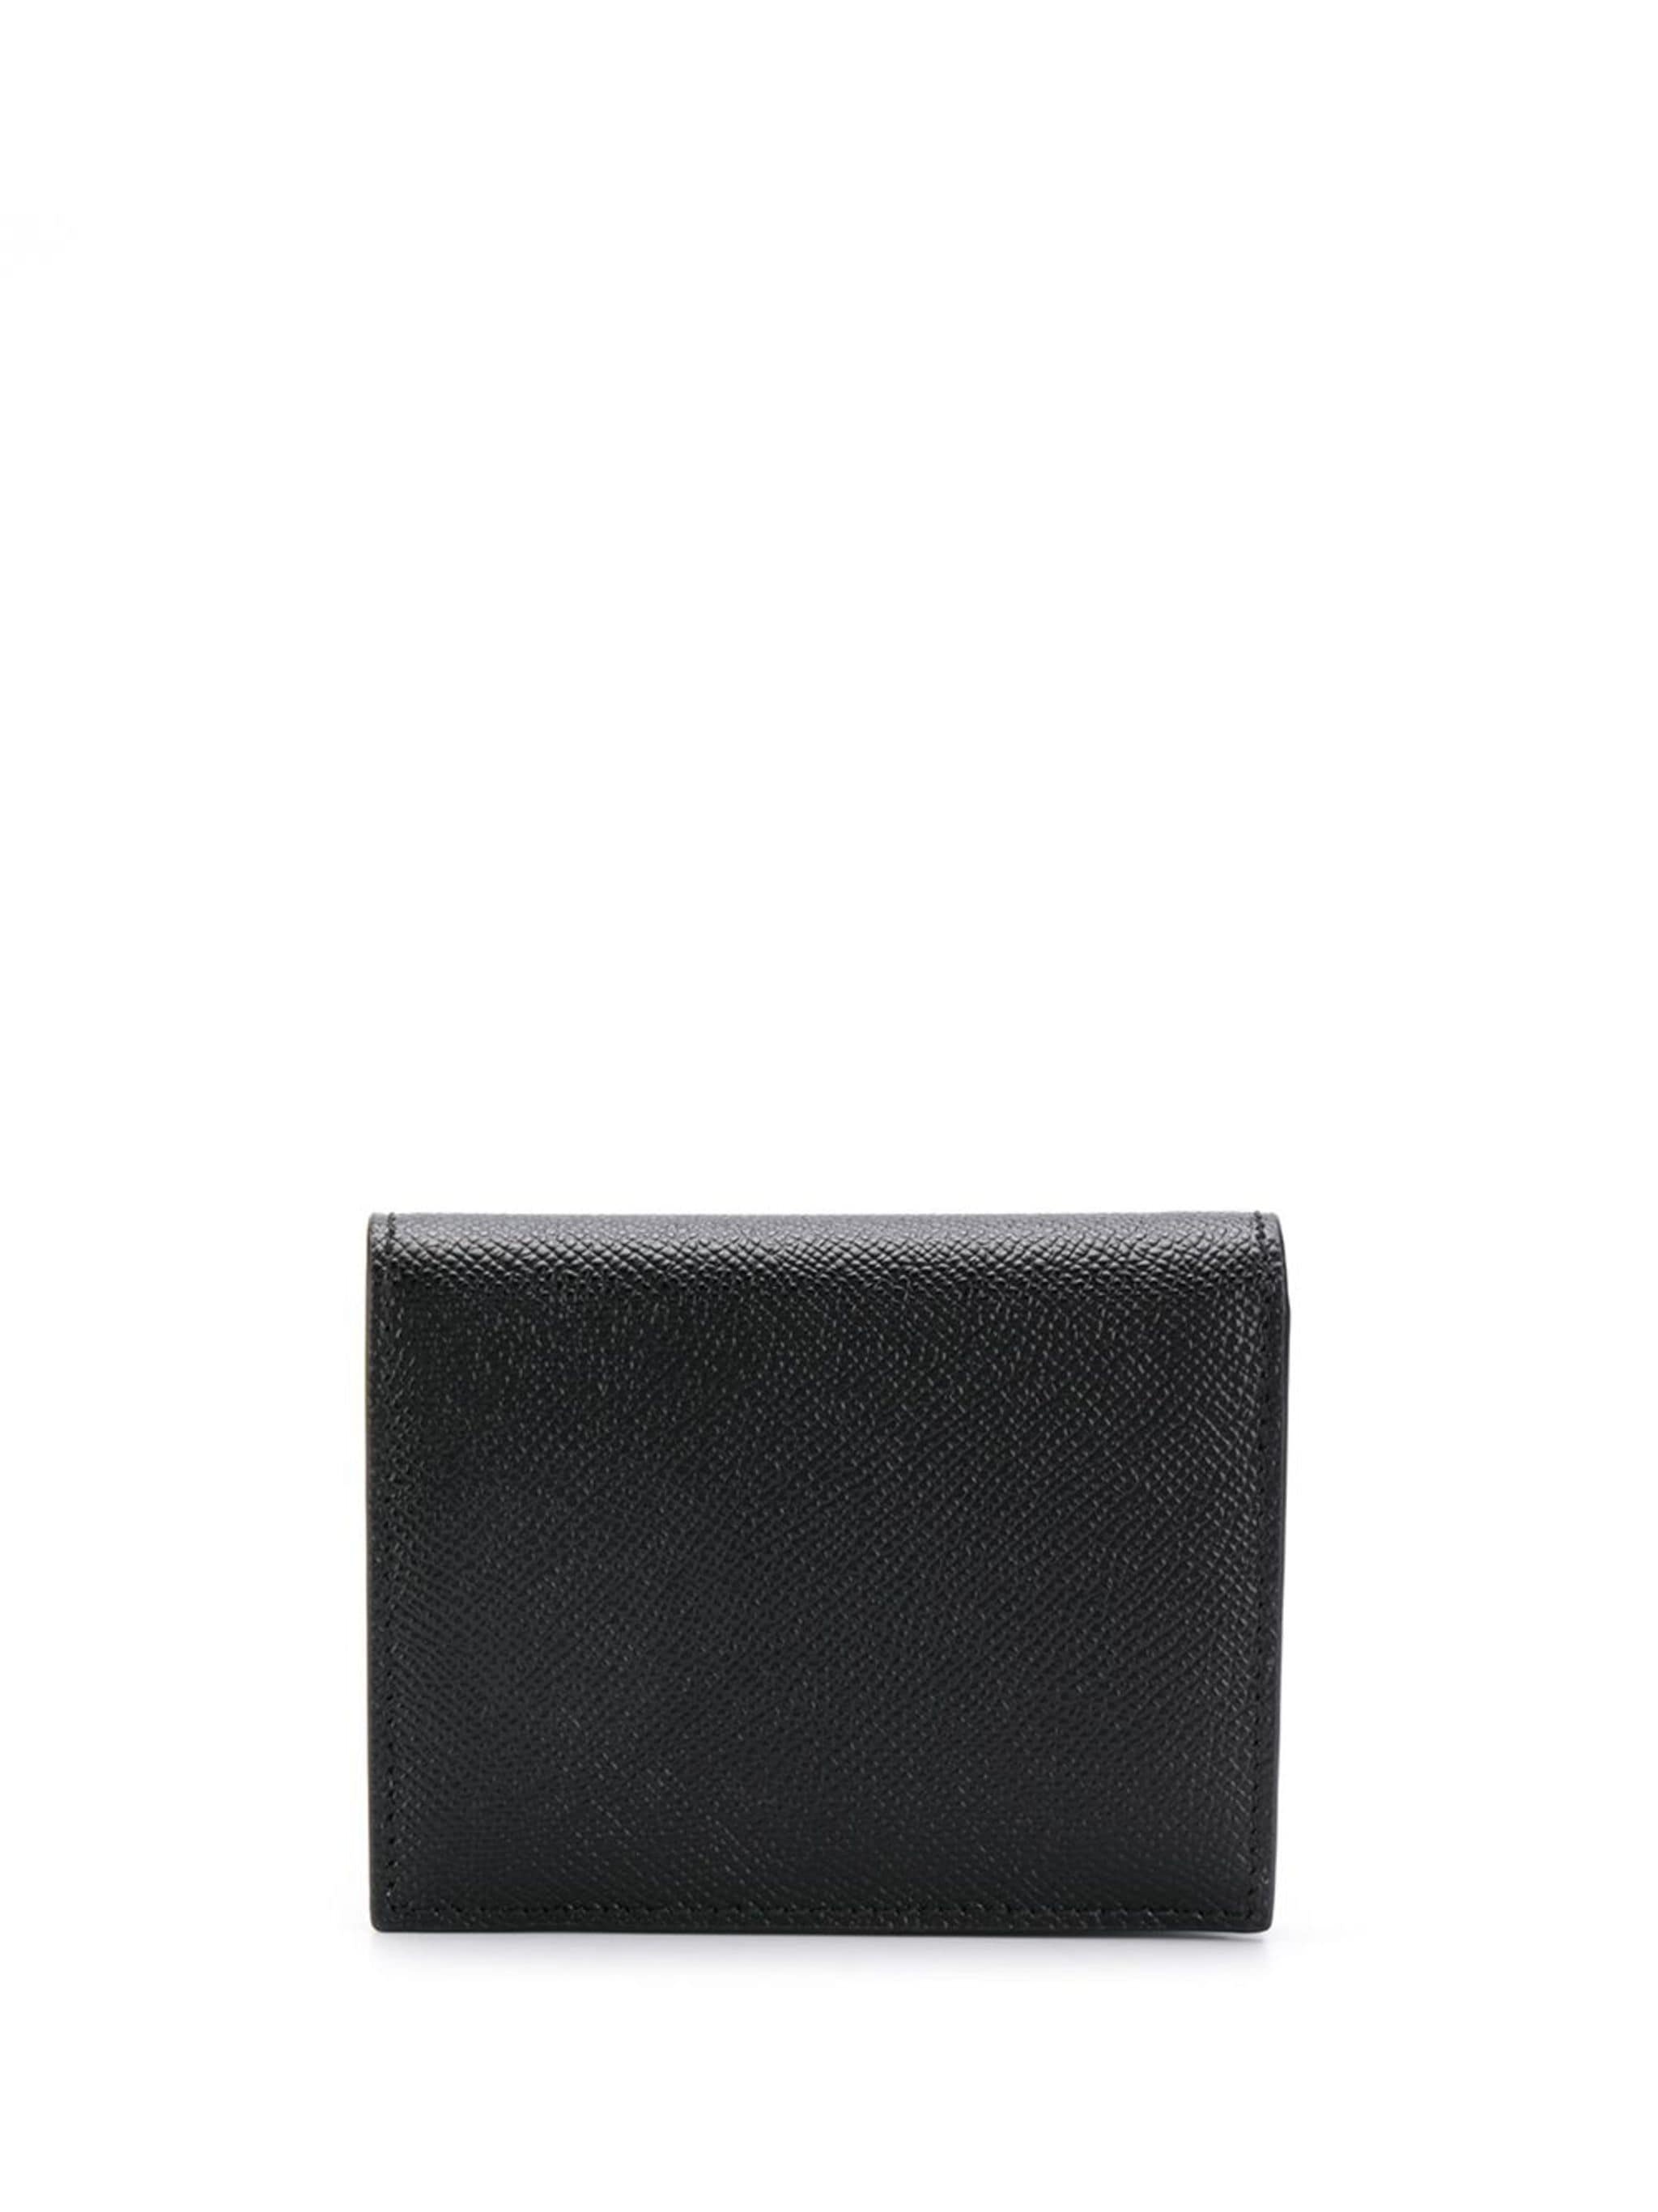 Gancini folding wallet - 2